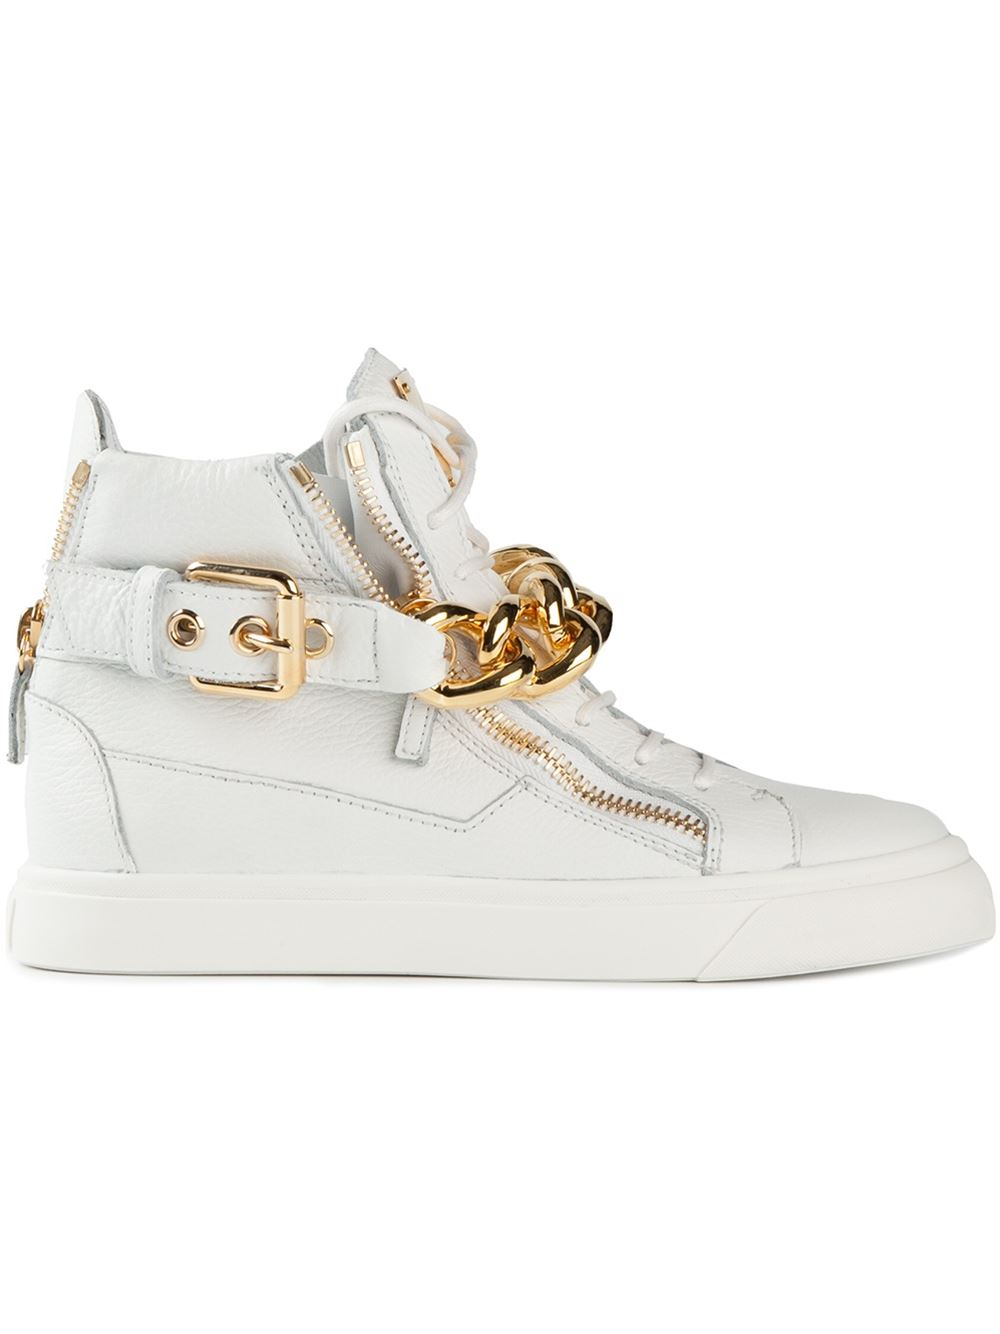 Giuseppe Zanotti Gold Chain Sneakers in White - Lyst